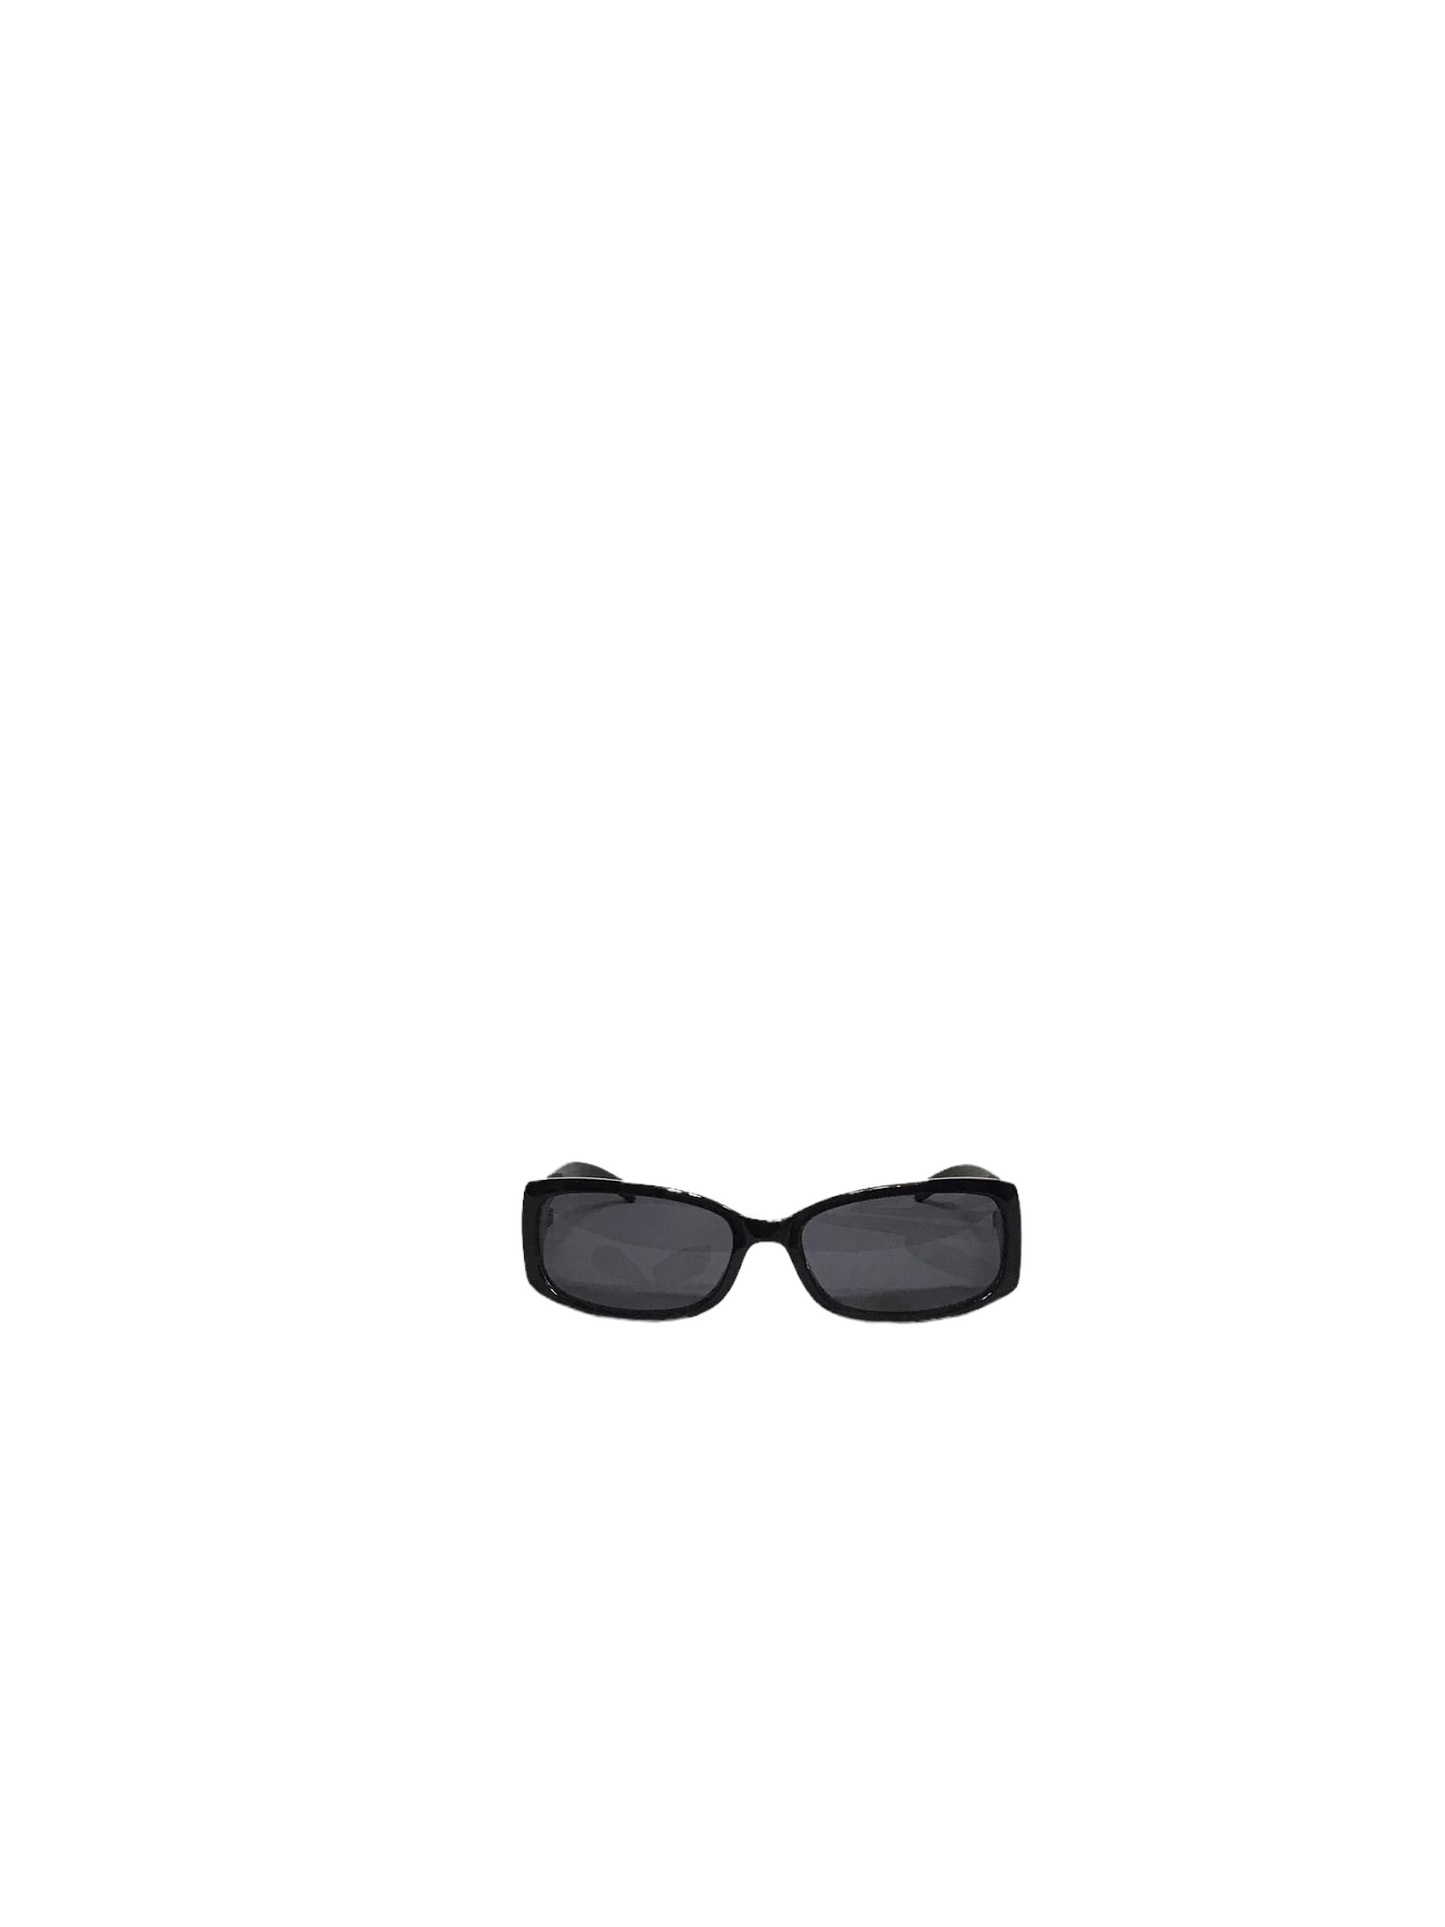 Mexx Square Black And White Sunglasses